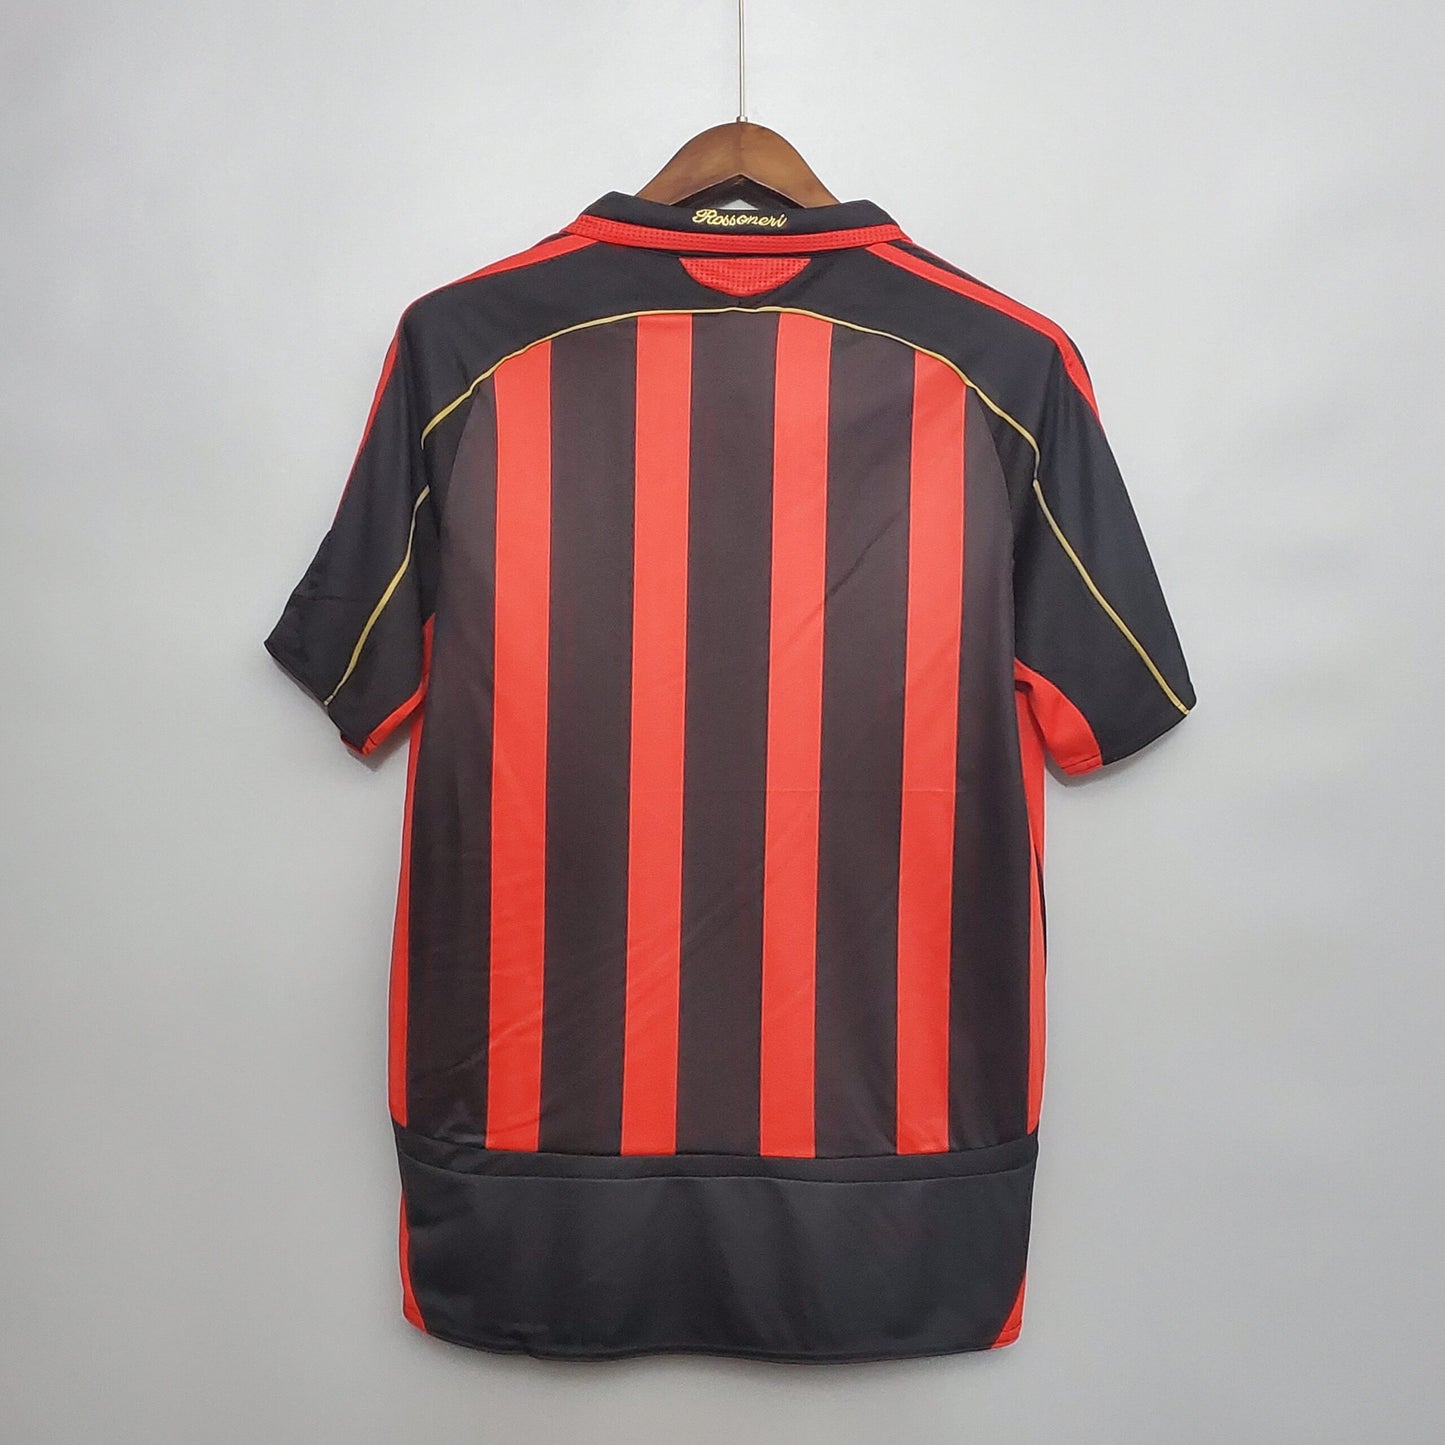 AC Milan Rossoneri 2006-07 Home Shirt Long Sleeves